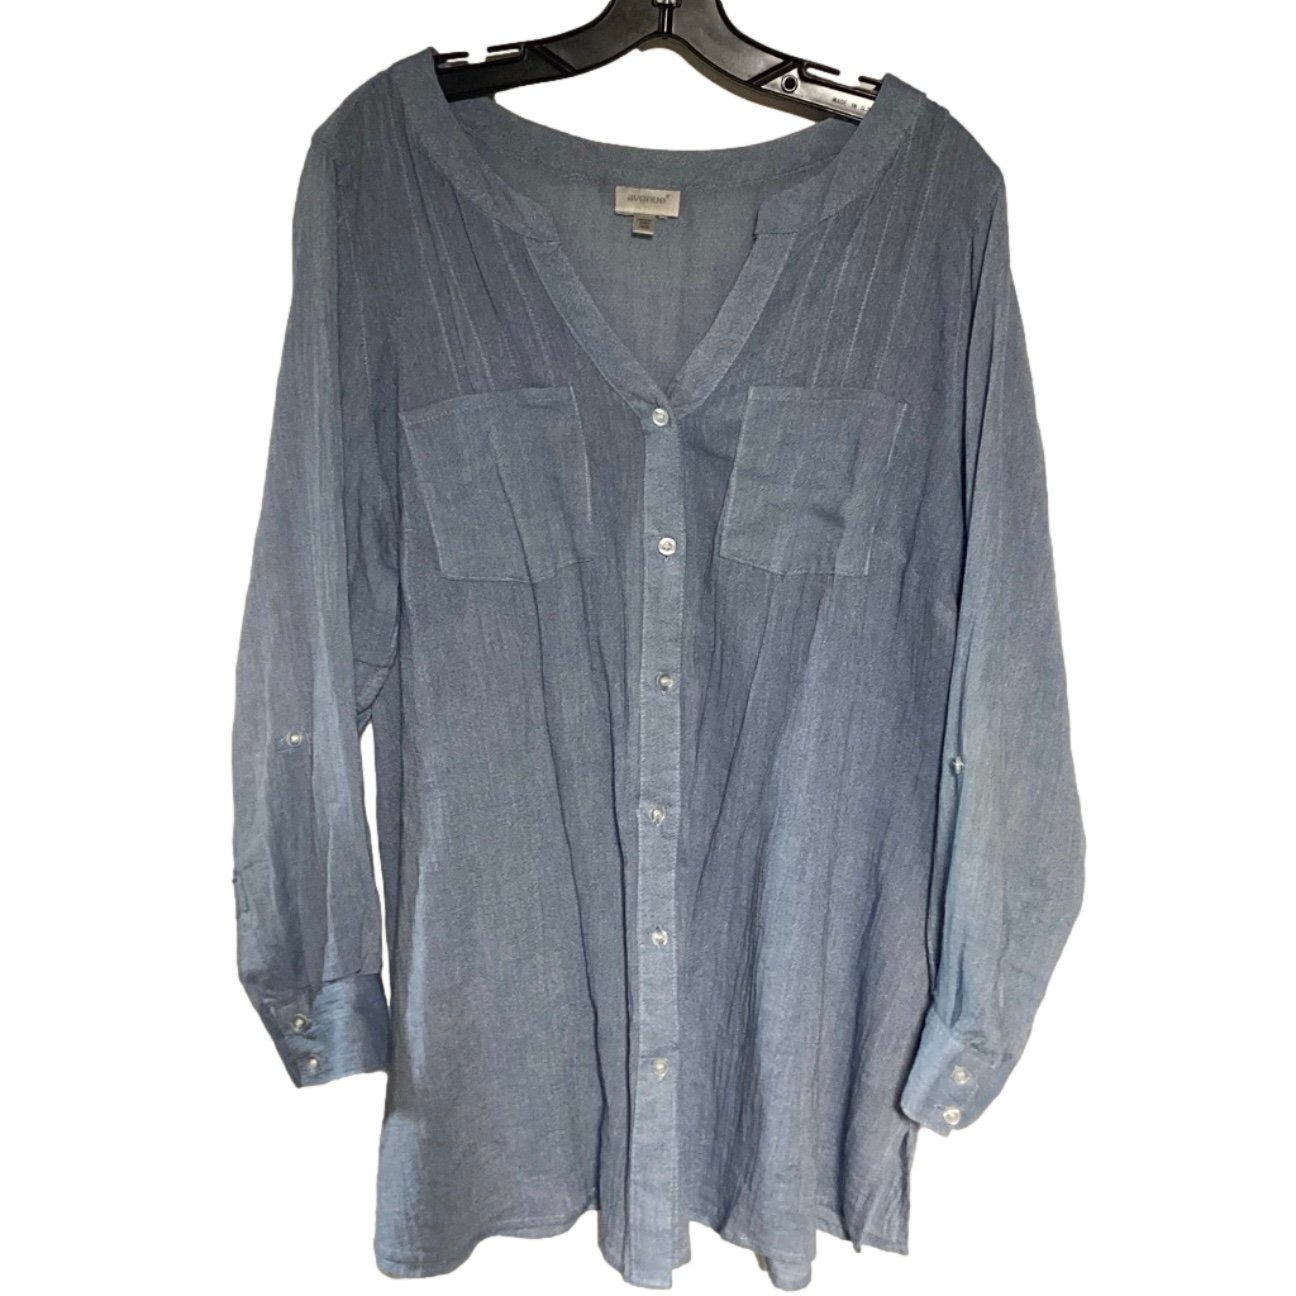 High quality Avenue blue button down shirt long sleeves lightweight Size 18/20 HehsQ8IJr online store